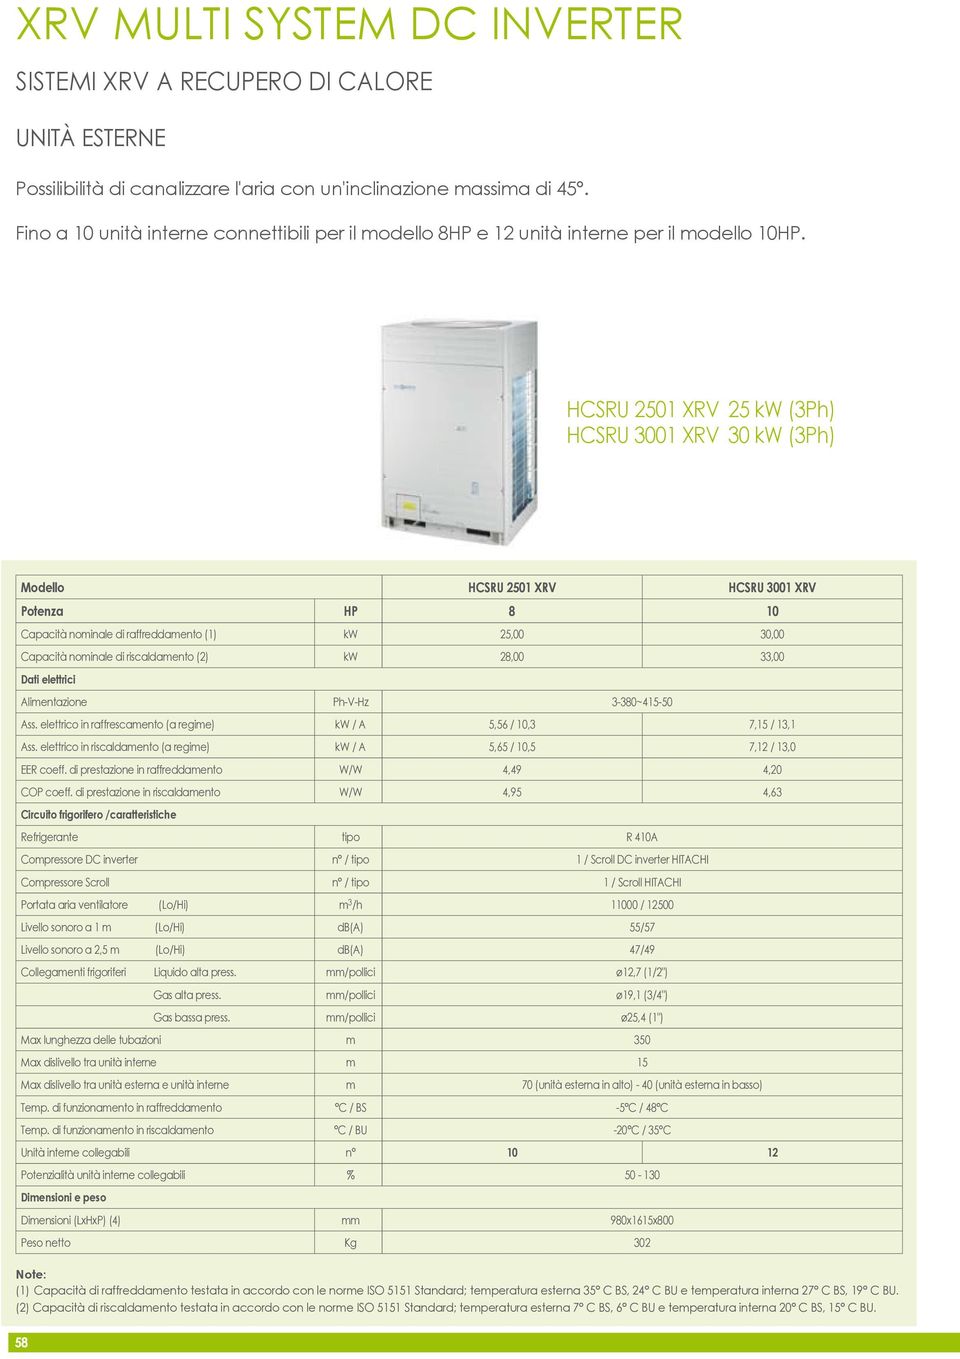 HCSRU 2501 XRV 25 kw (3Ph) HCSRU 3001 XRV 30 kw (3Ph) Modello HCSRU 2501 XRV HCSRU 3001 XRV Potenza HP 8 10 Capacità nominale di raffreddamento (1) kw 25,00 30,00 Capacità nominale di riscaldamento